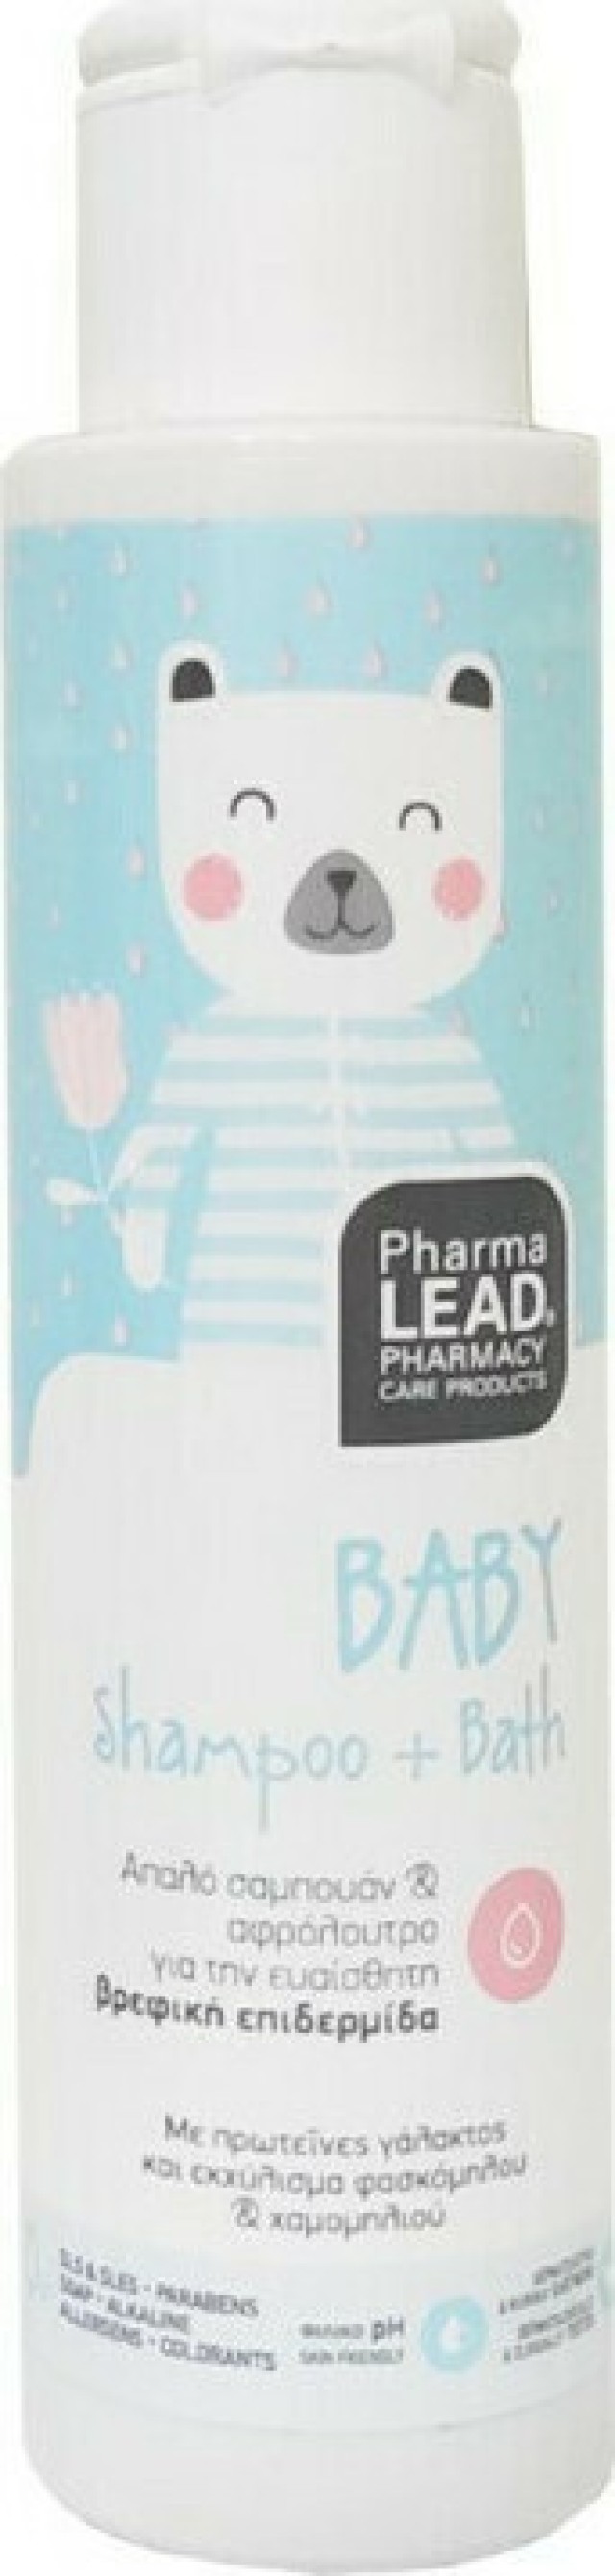 PharmaLead Baby Shampoo & Bath, Απαλό Σαμπουάν & Αφρόλουτρο Για Την Ευαίσθητη Βρεφική Επιδερμίδα 100ml